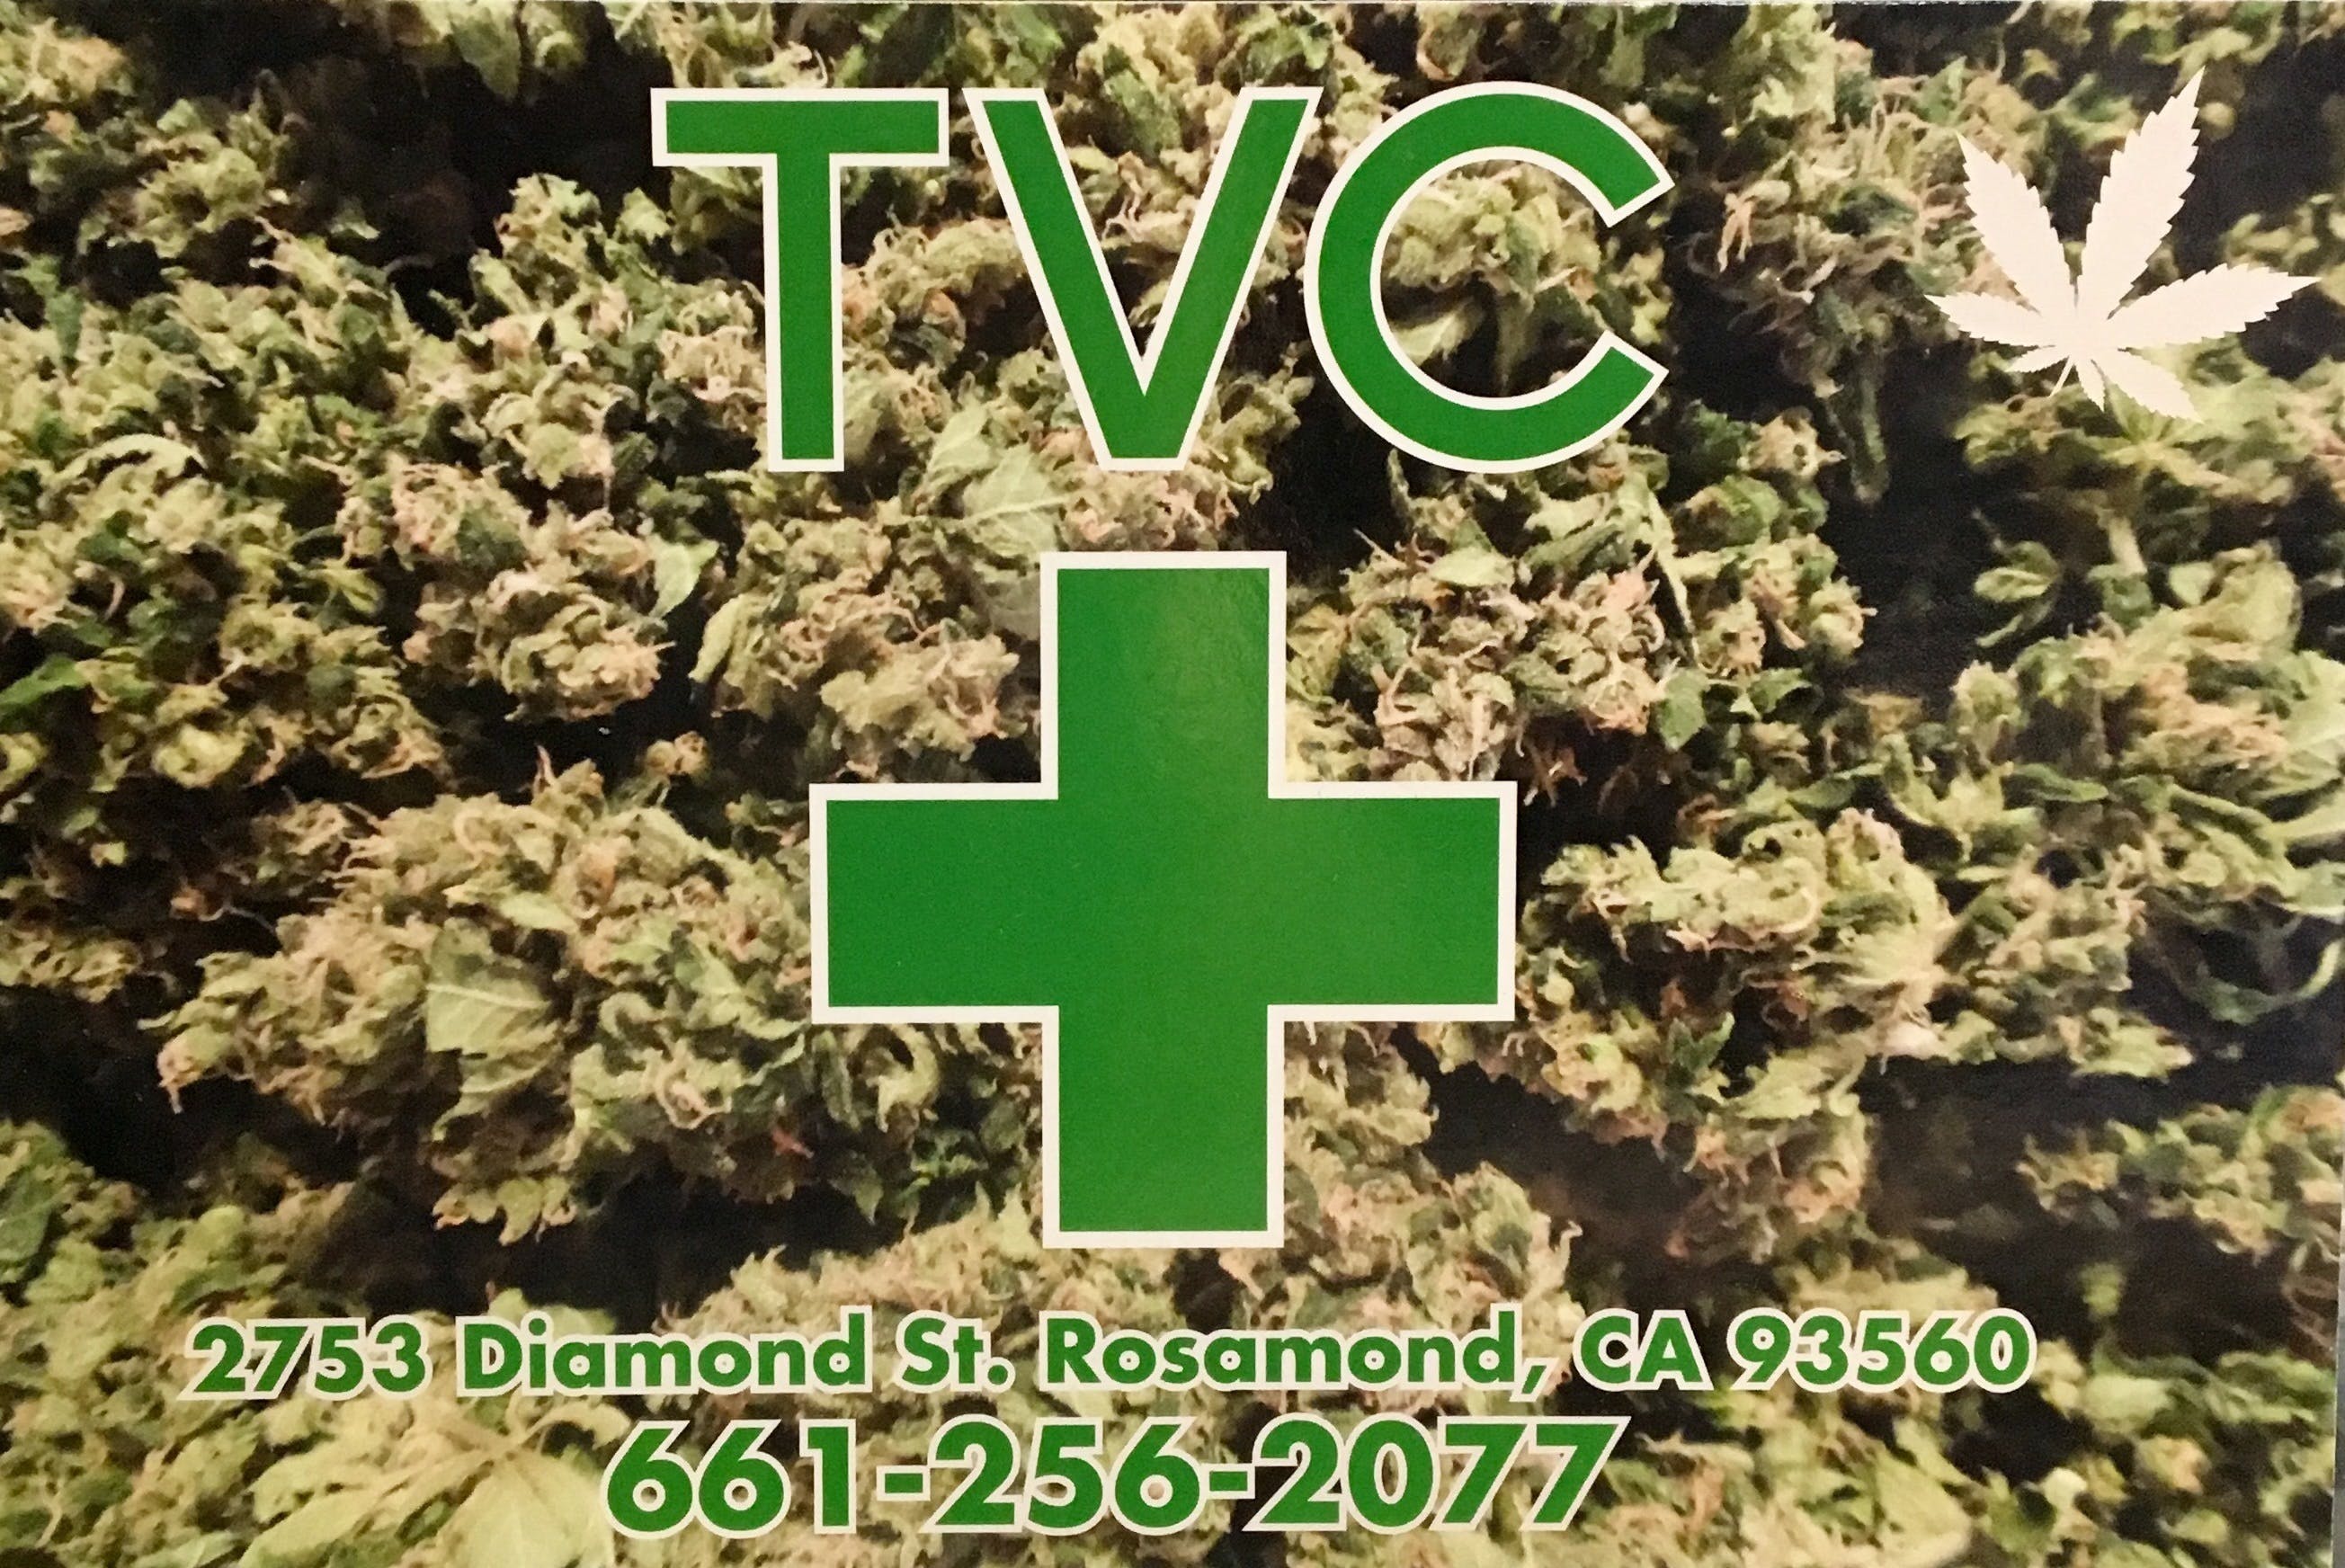 TVC - Medical Marijuana Doctors - Cannabizme.com